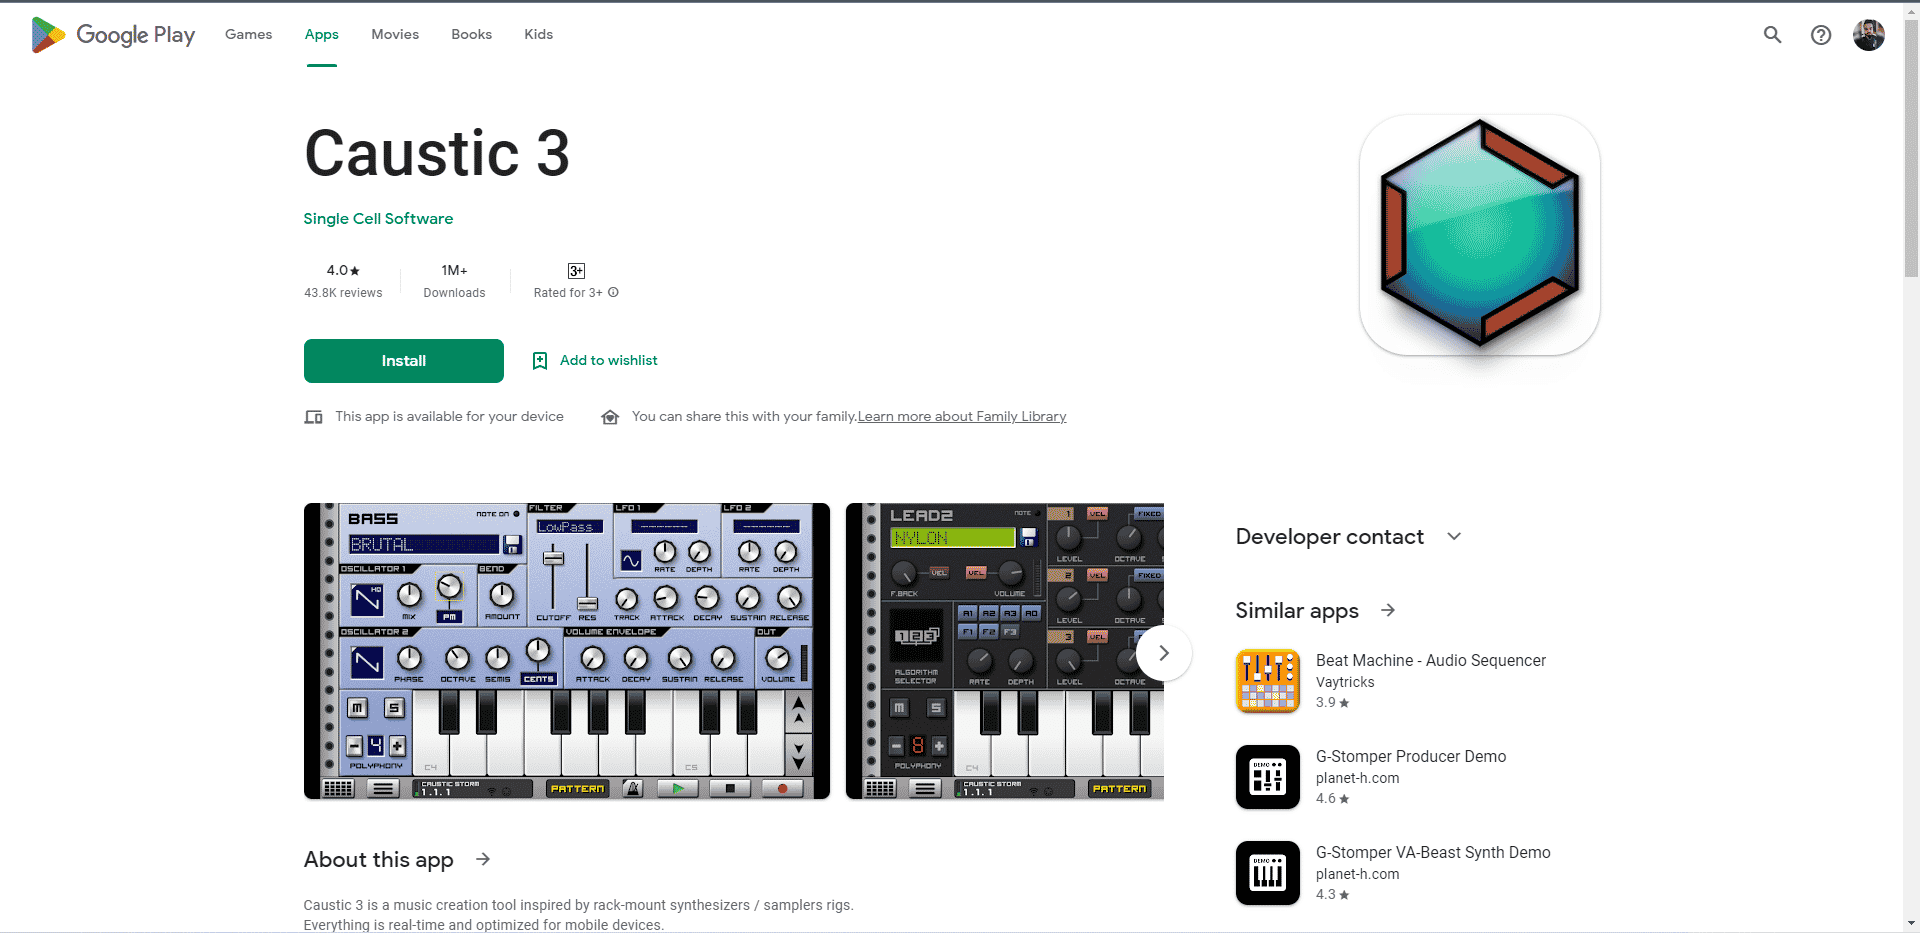 Casutic 3 Play Store webpage